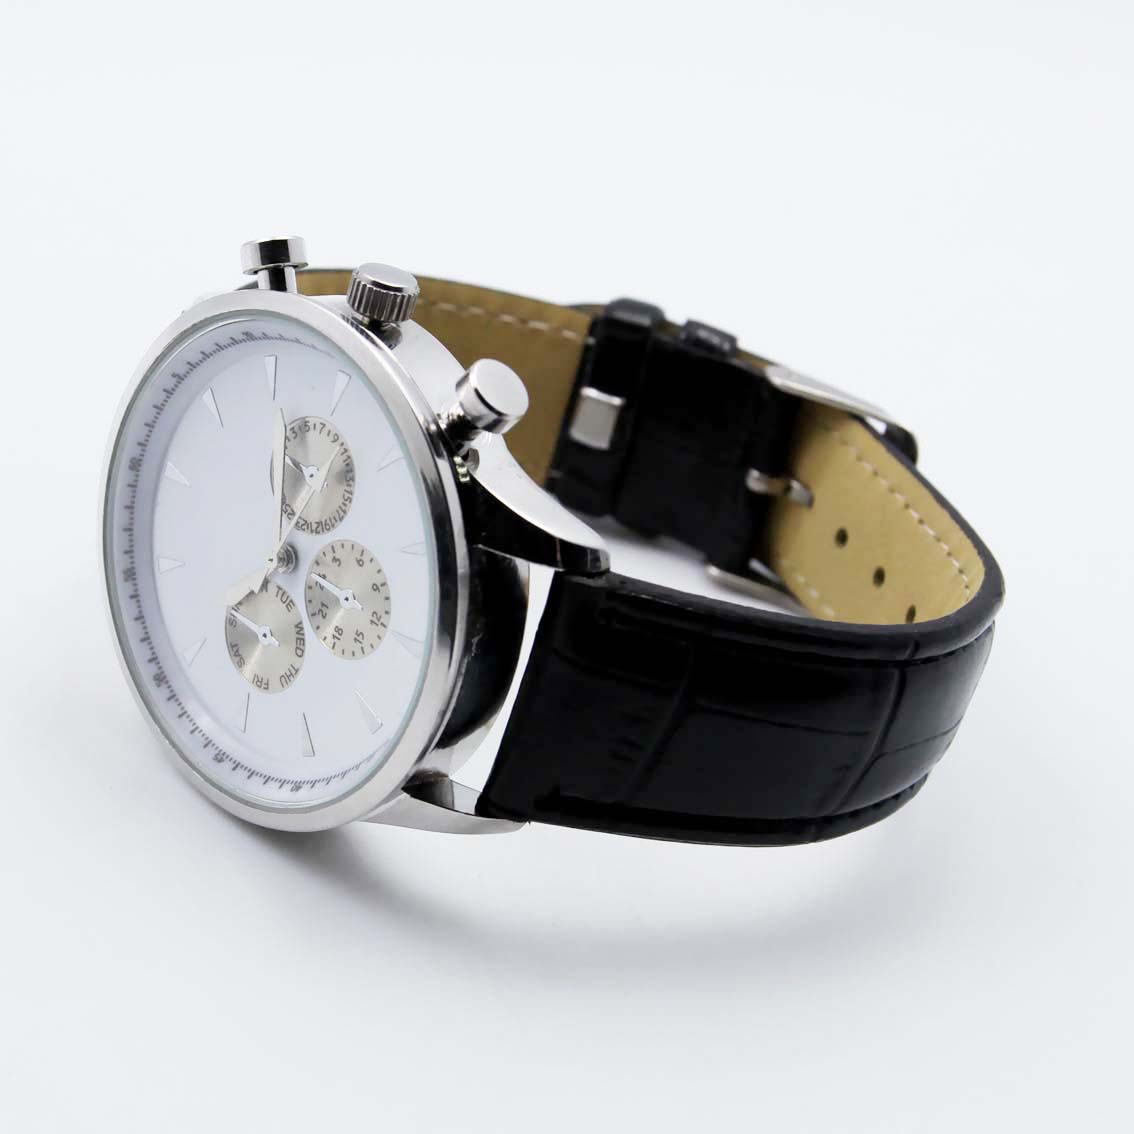 #02064Men's wristwatch quartz analog leather strap watch